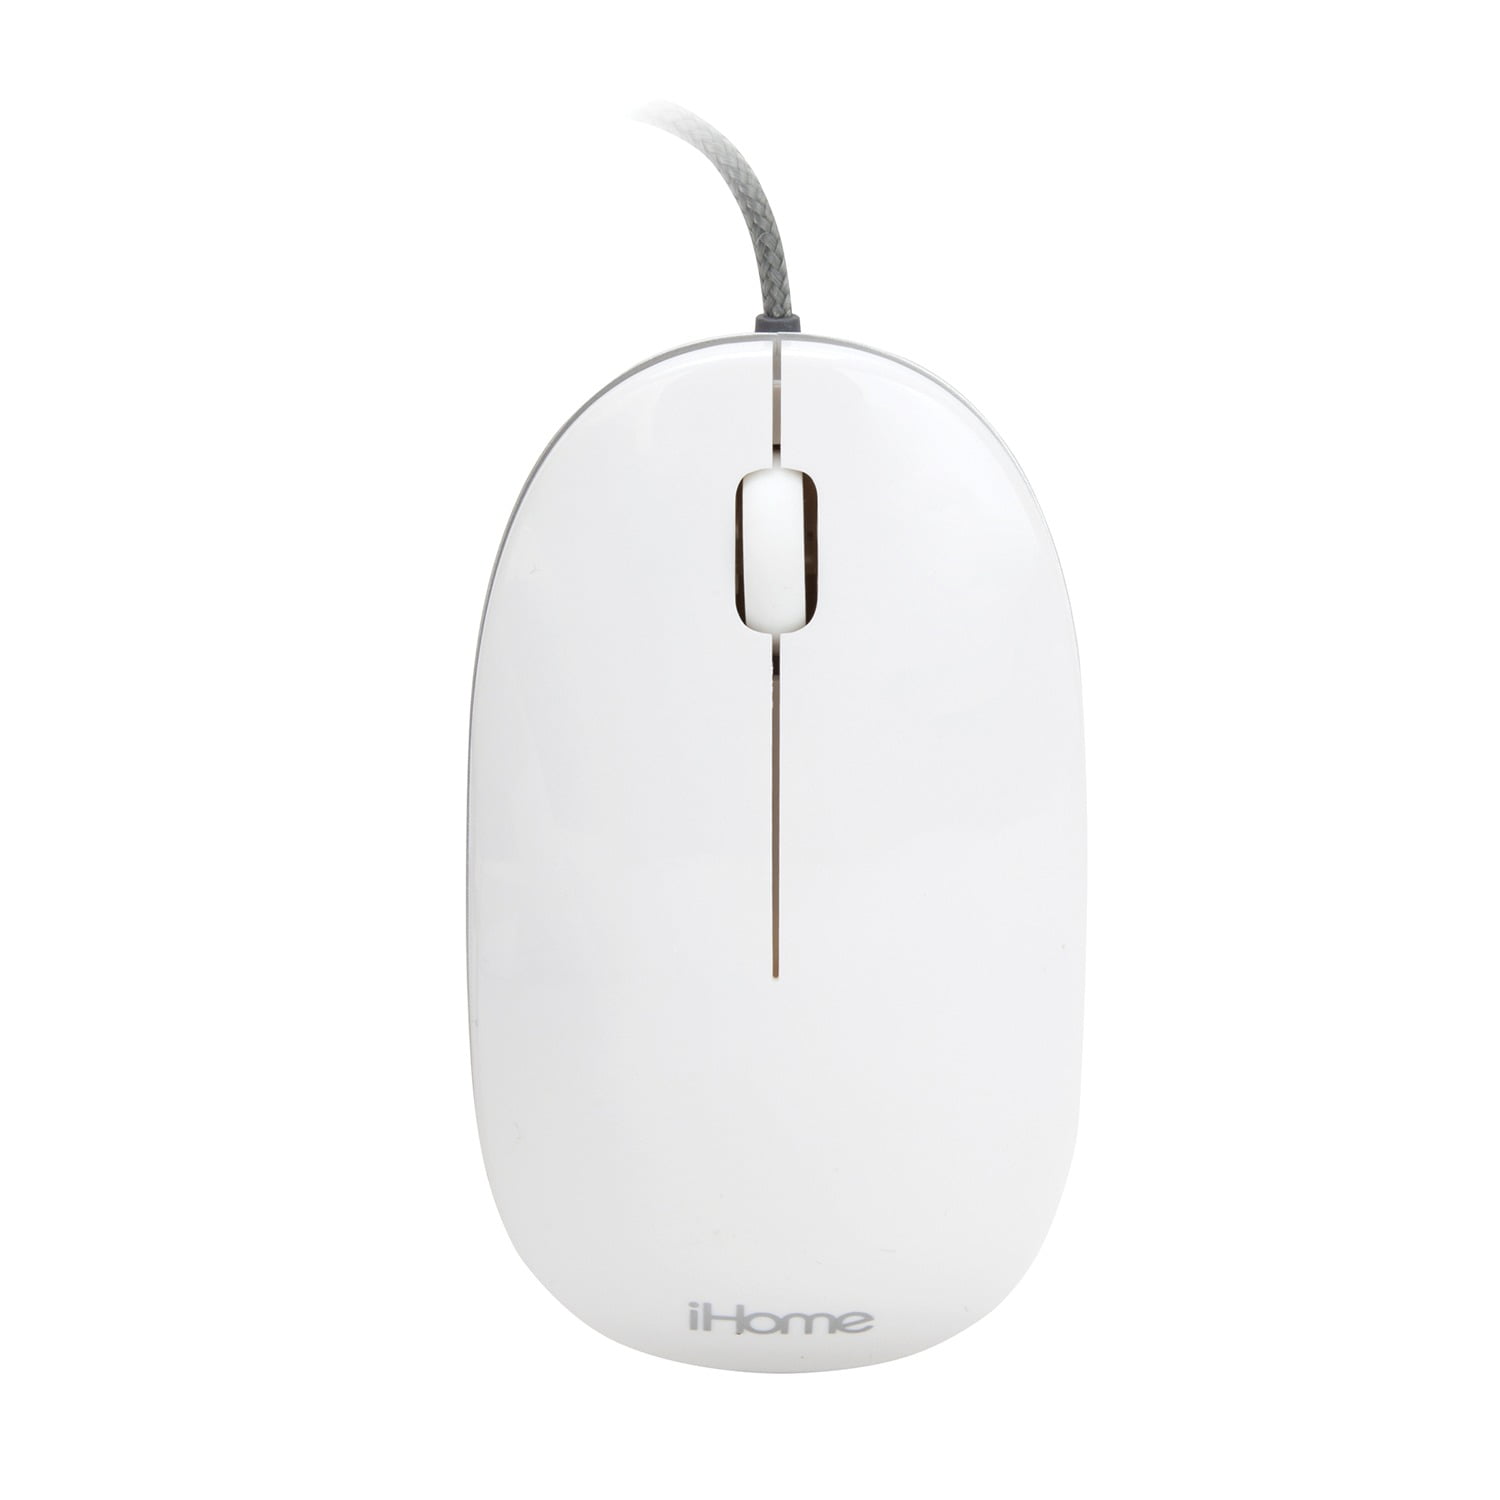 Apple Macintosh Mouse m0100. Мышка Мак. Мышь для макинтош Классик. Wired White Mouse.